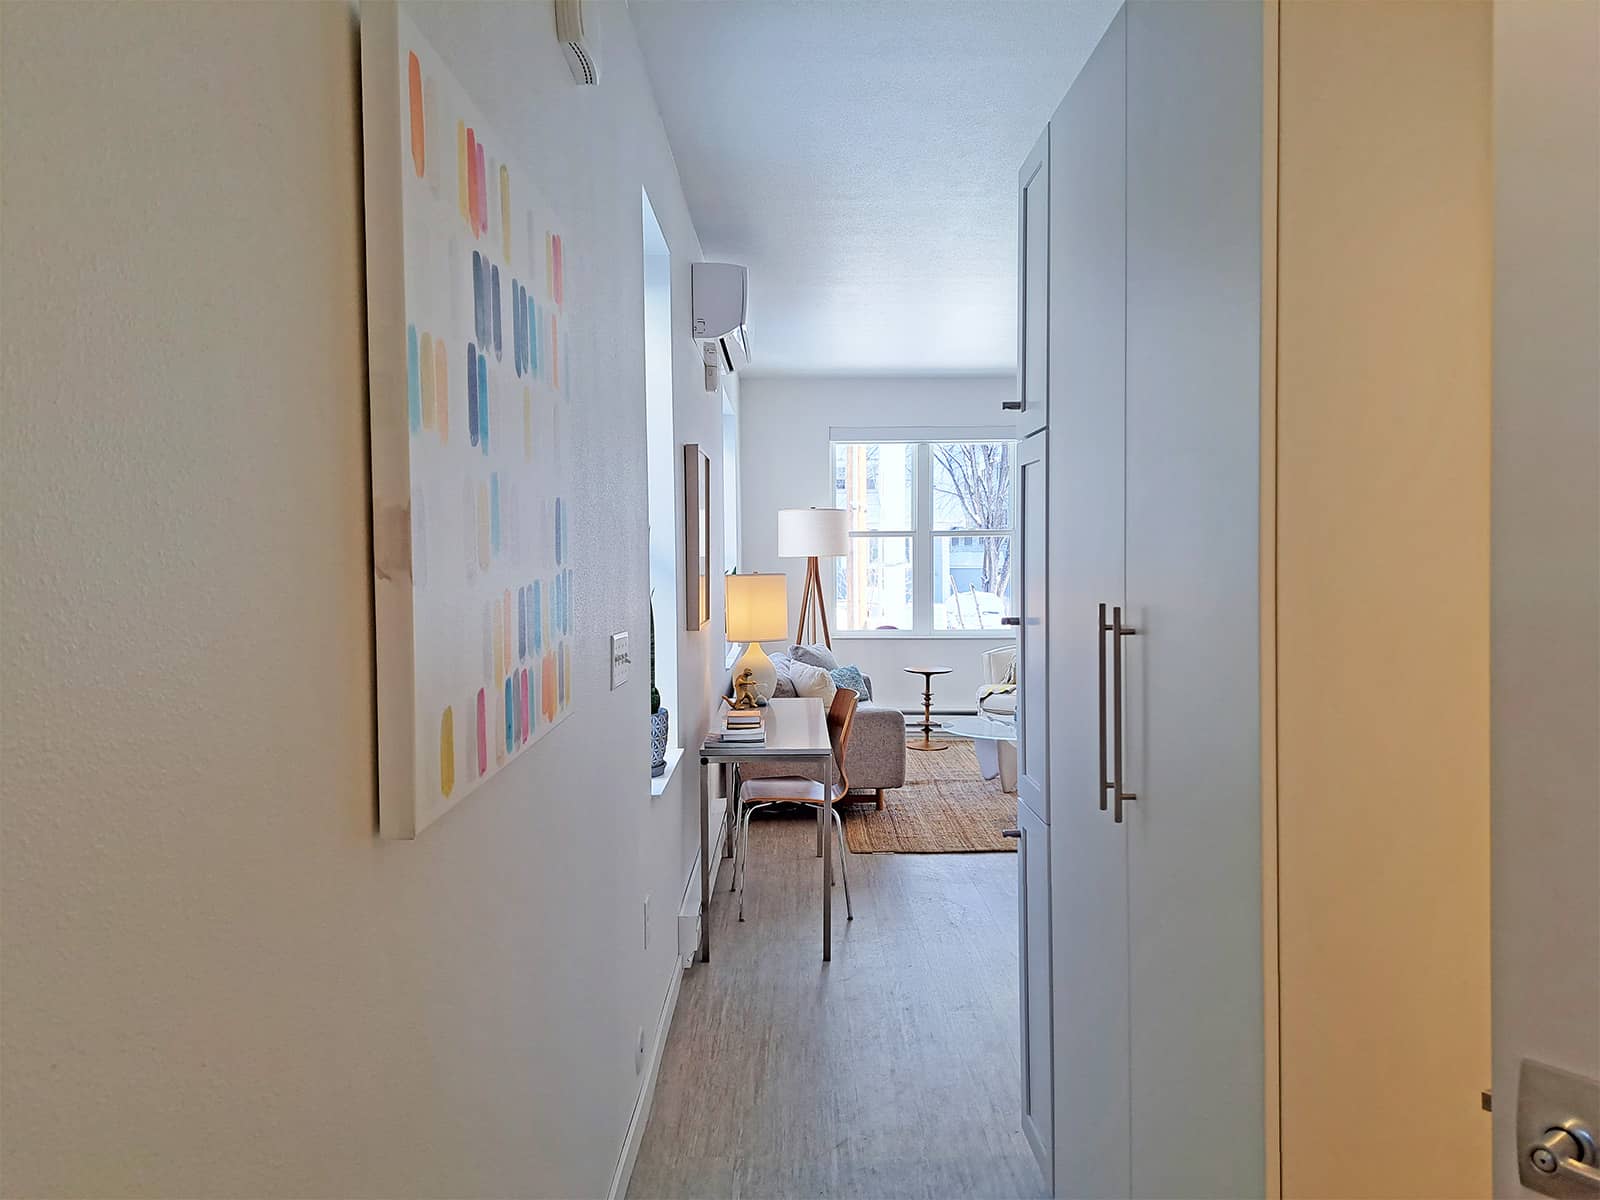 MODEL - Grove apartments hallway